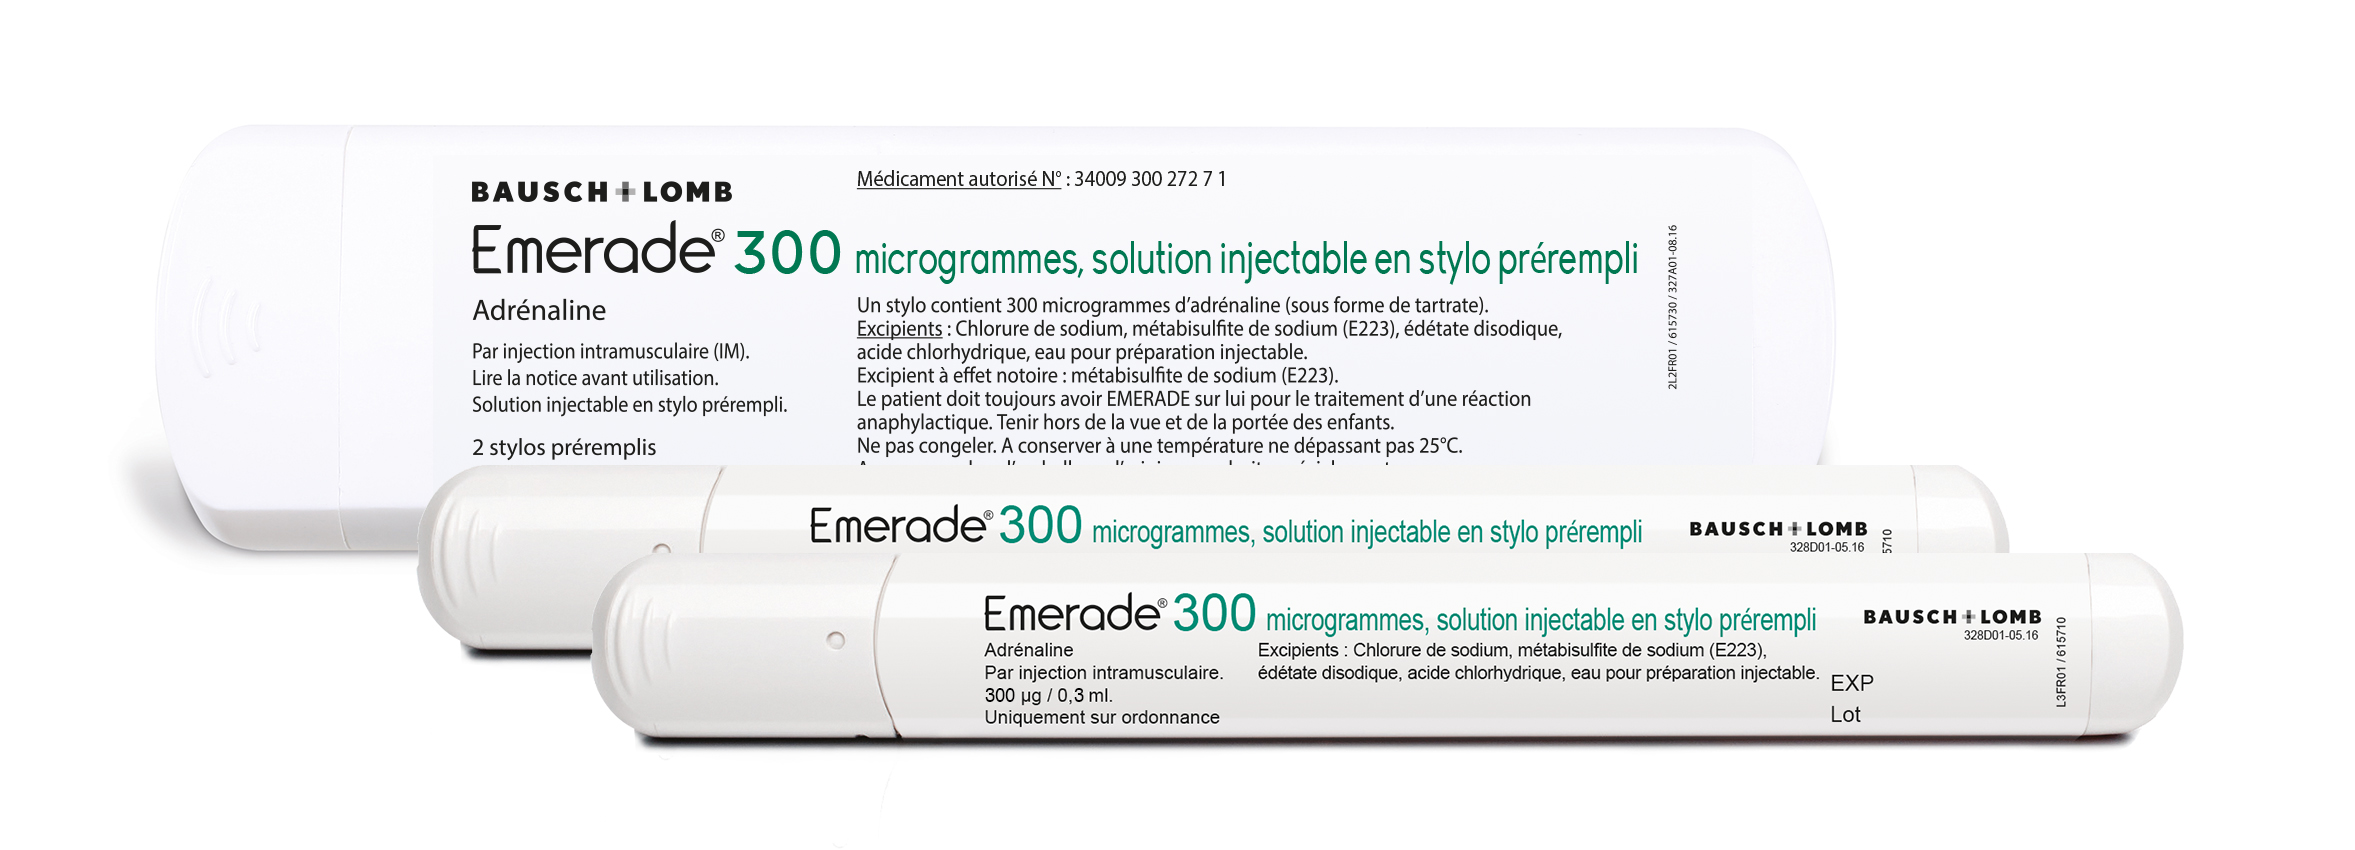 Photo de conditionnement <span class='vidalbox-gamme-product'>(EMERADE 300 µg sol inj en stylo prérempli)</span>